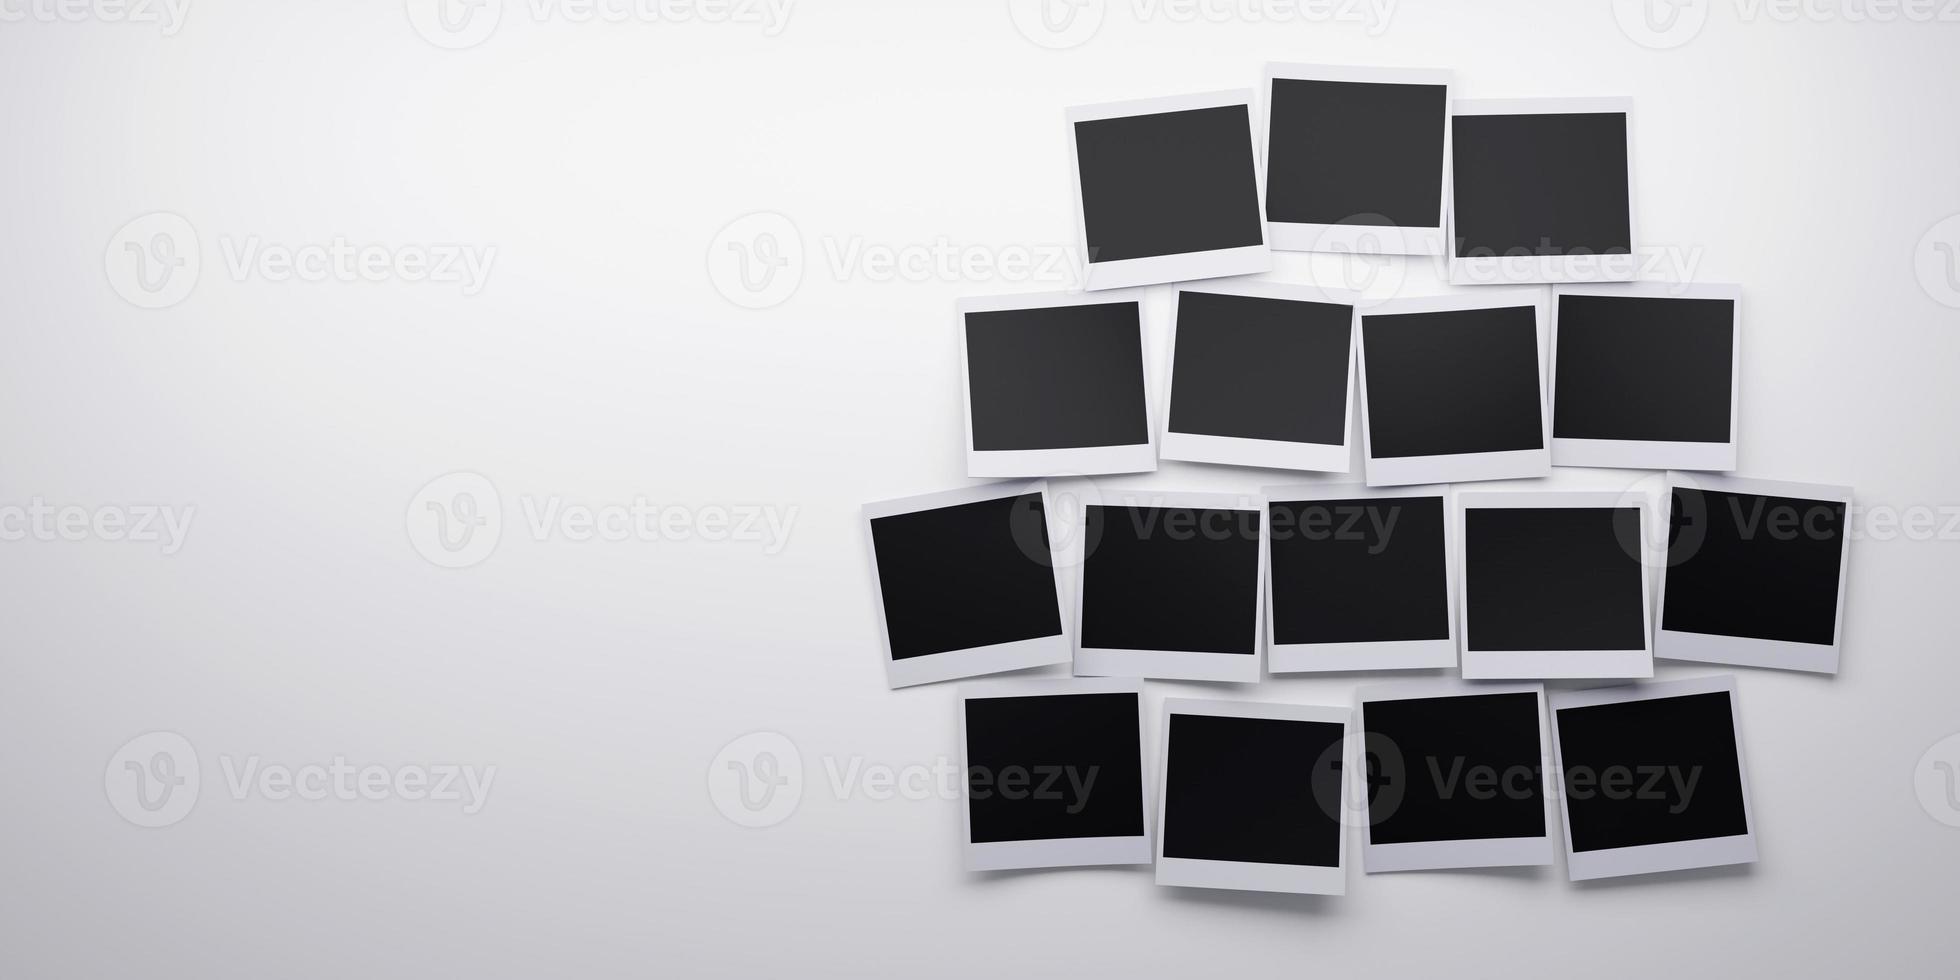 varios marcos de impresión de fotos instantáneas de estilo polaroid en blanco. representación 3d